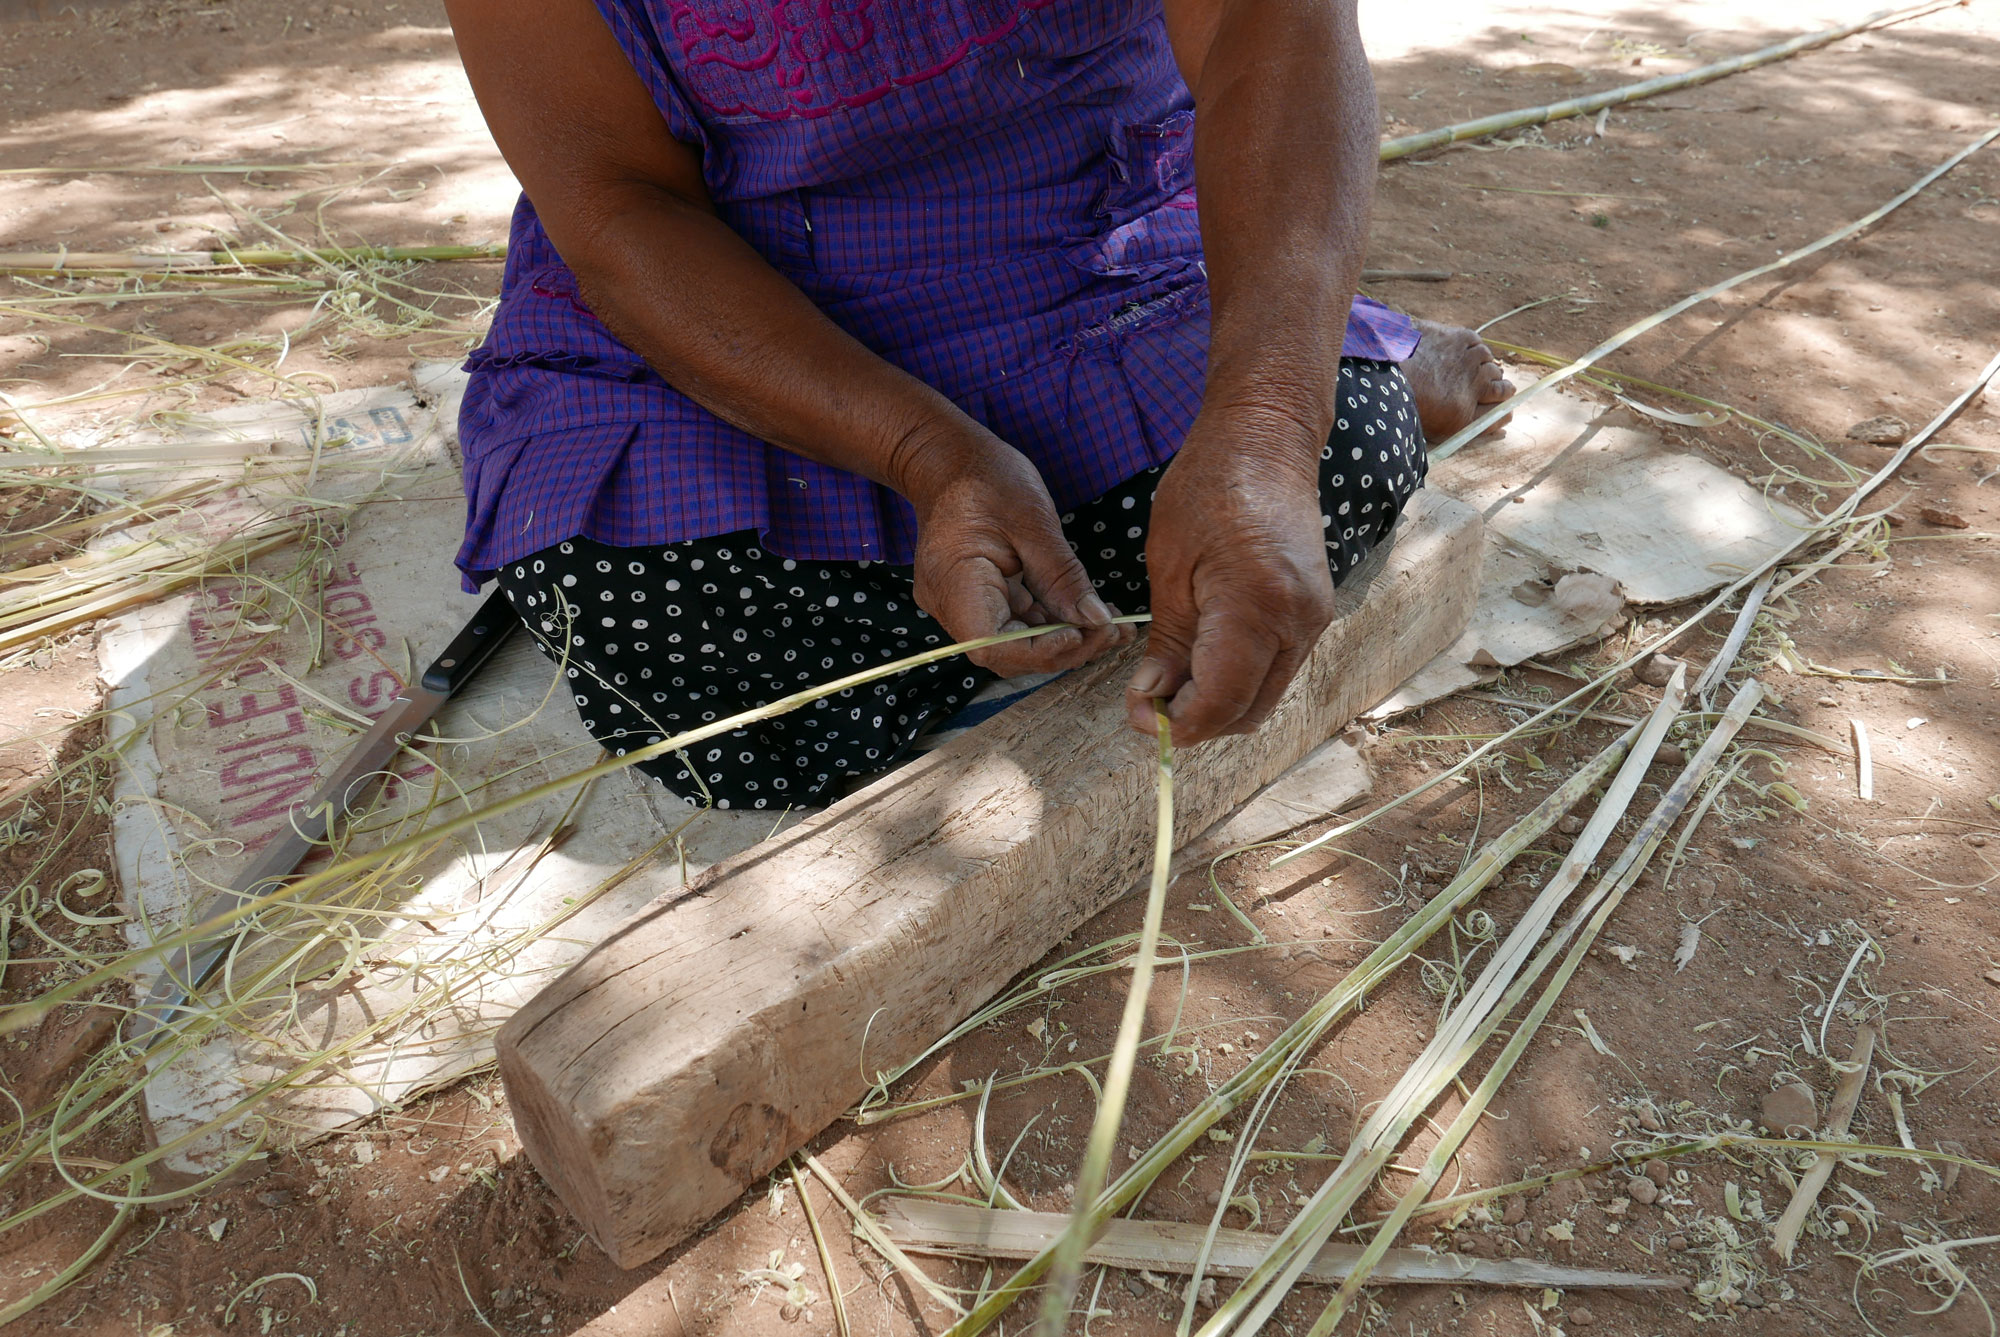 Artisan Splitting Carrizo Reeds Ready for Weaving Baskets in Oaxaca Mexico - www.nidocollective.com/carrizoweaving #carrizo #canastascarrizo #basketweaving